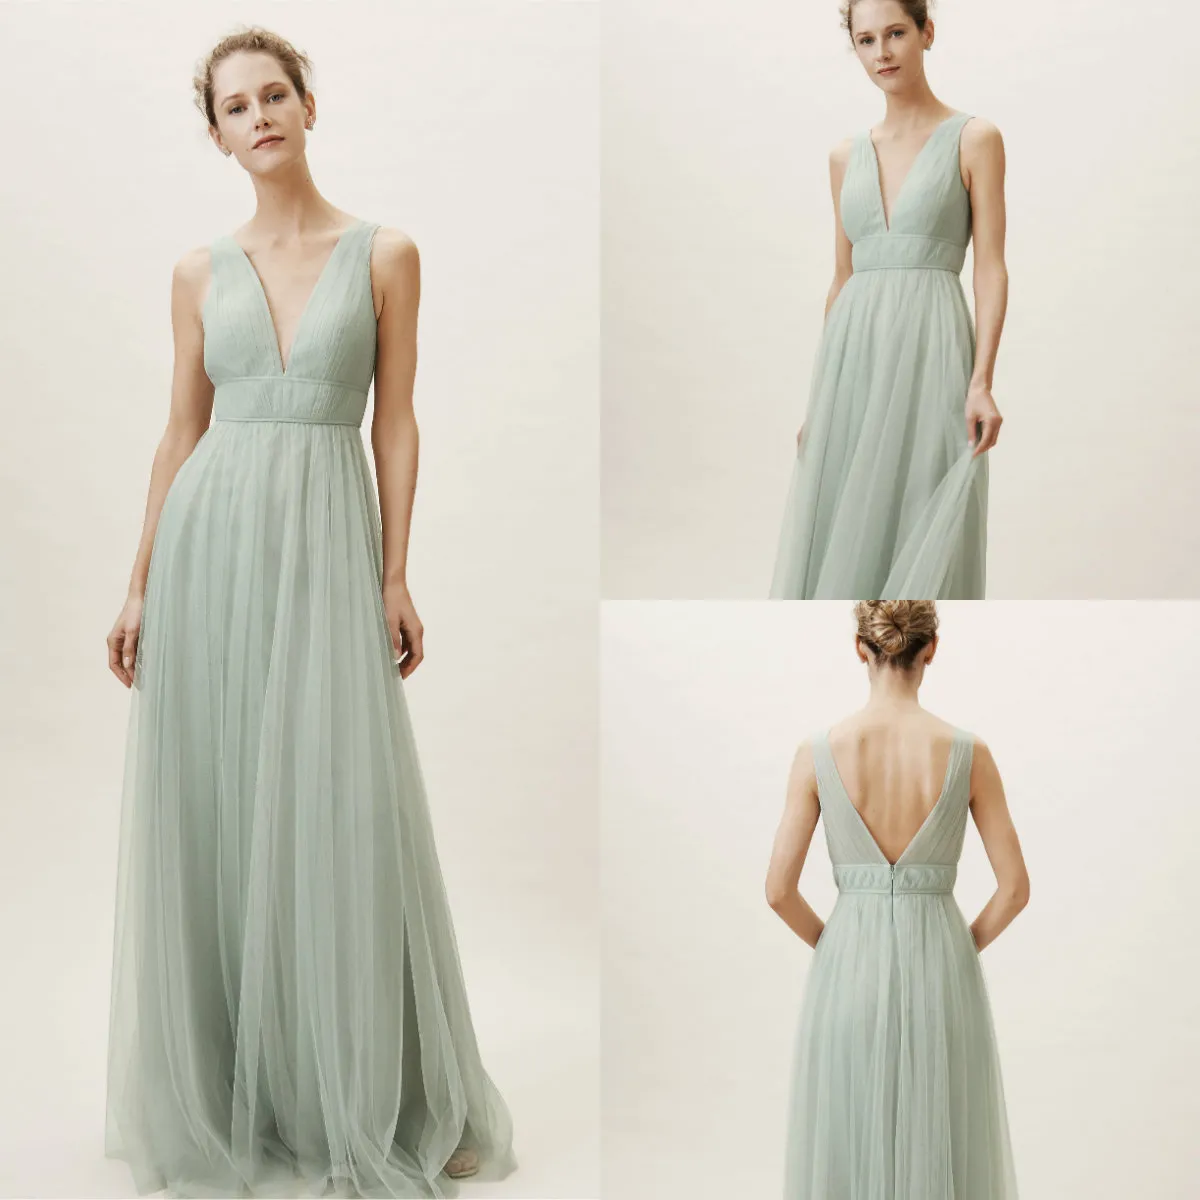 2019 bhldn bruidsmeisje jurken v-hals tule mouwloze vloer lengte munt groene formele gelegenheid jurk goedkope avondjurken